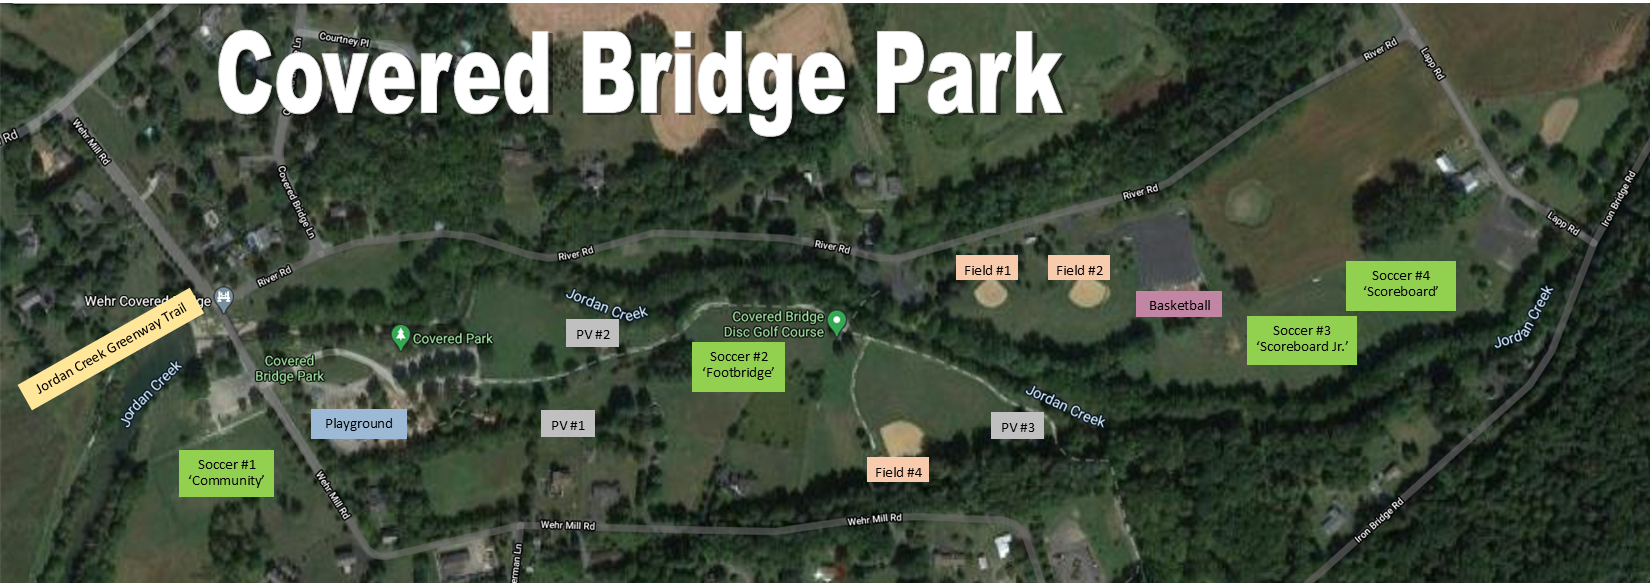 Covered Bridge Park Map